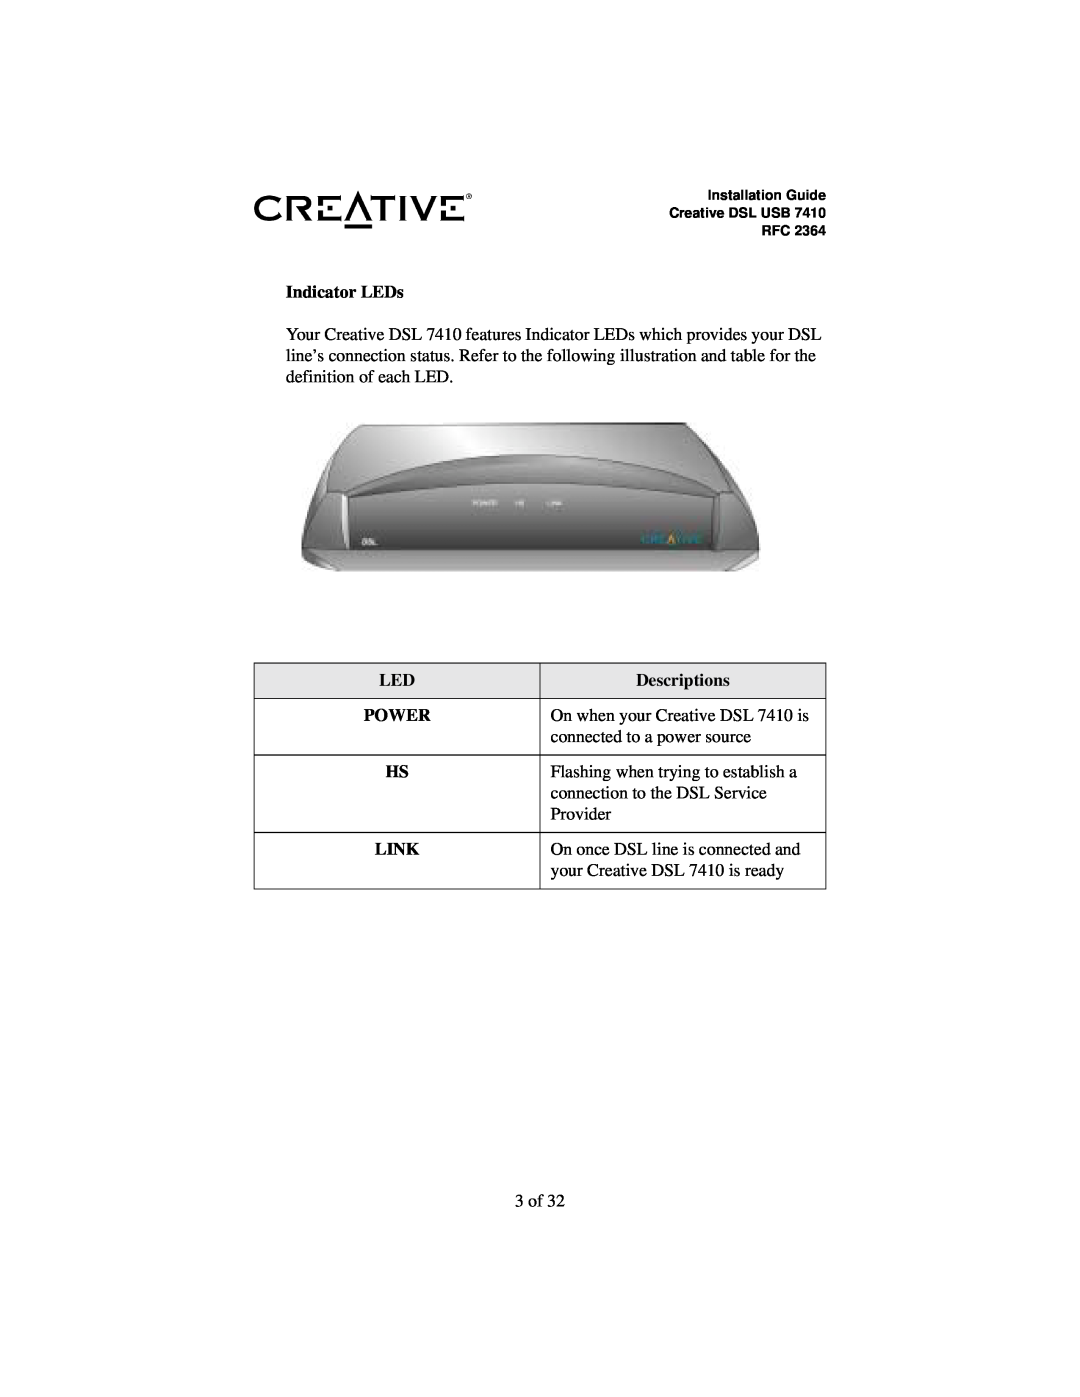 Creative RFC 2364 appendix Indicator LEDs, Descriptions, Power, Link 